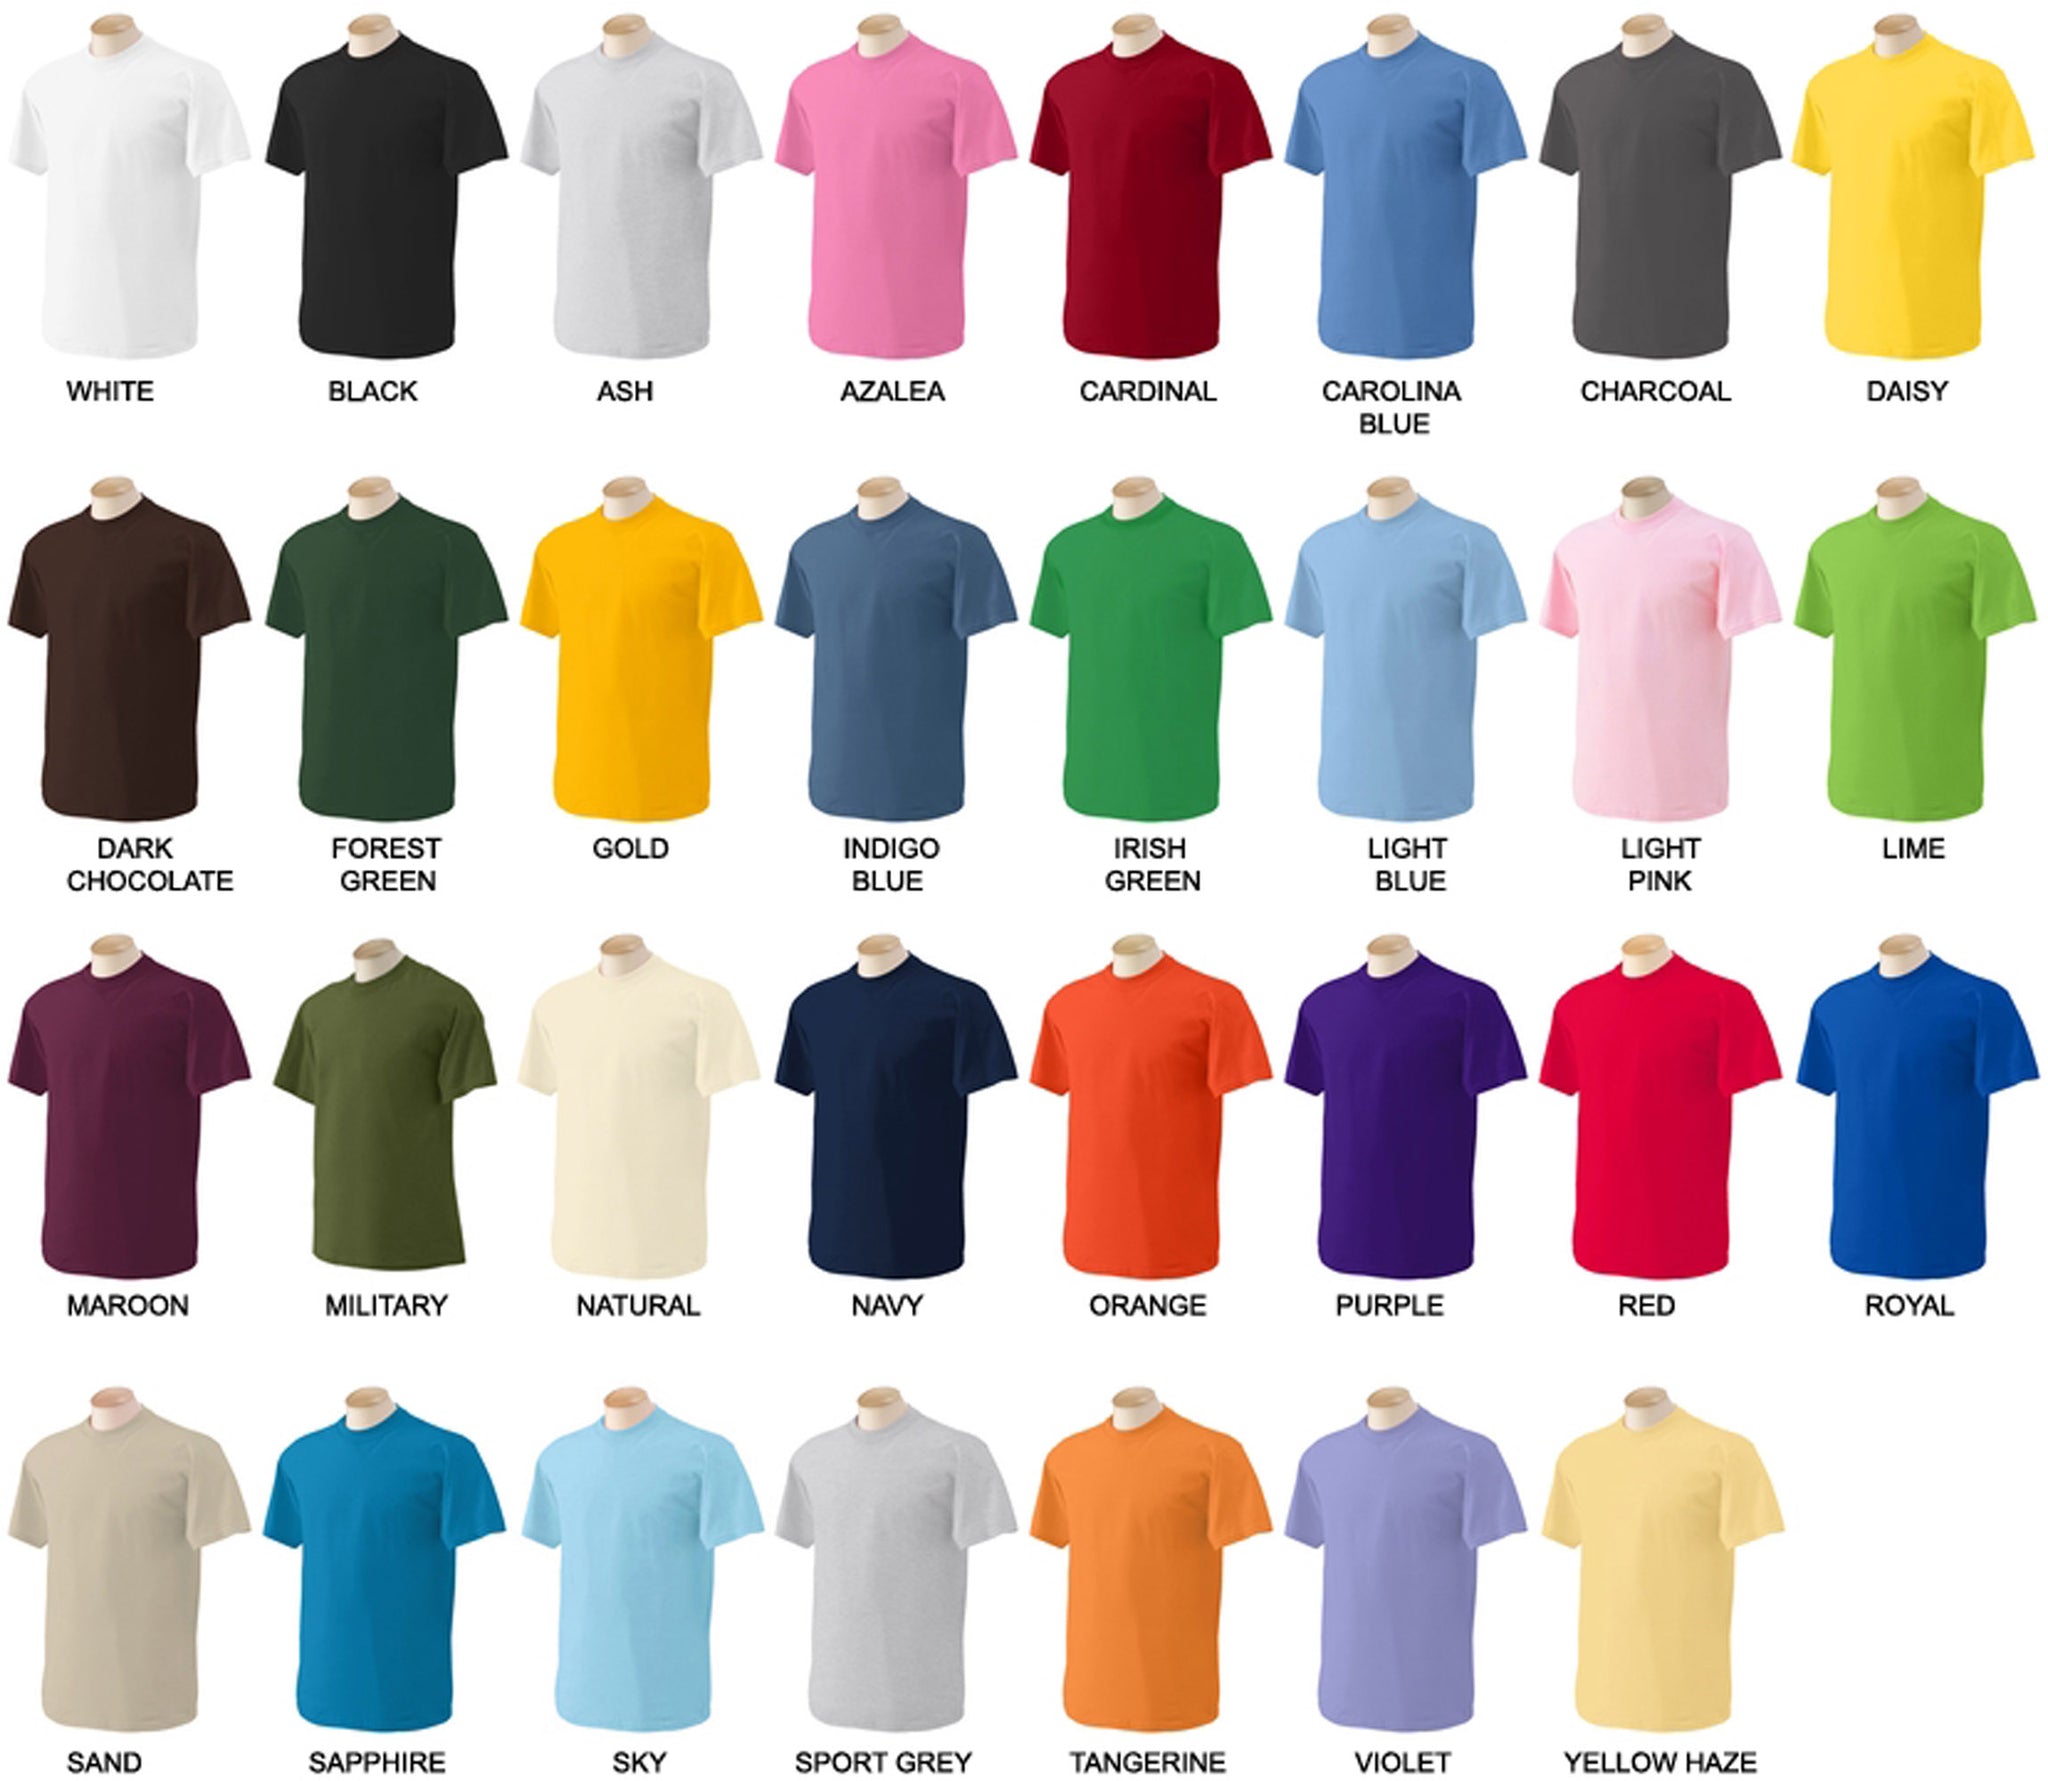 Winner T Shirt Color Chart